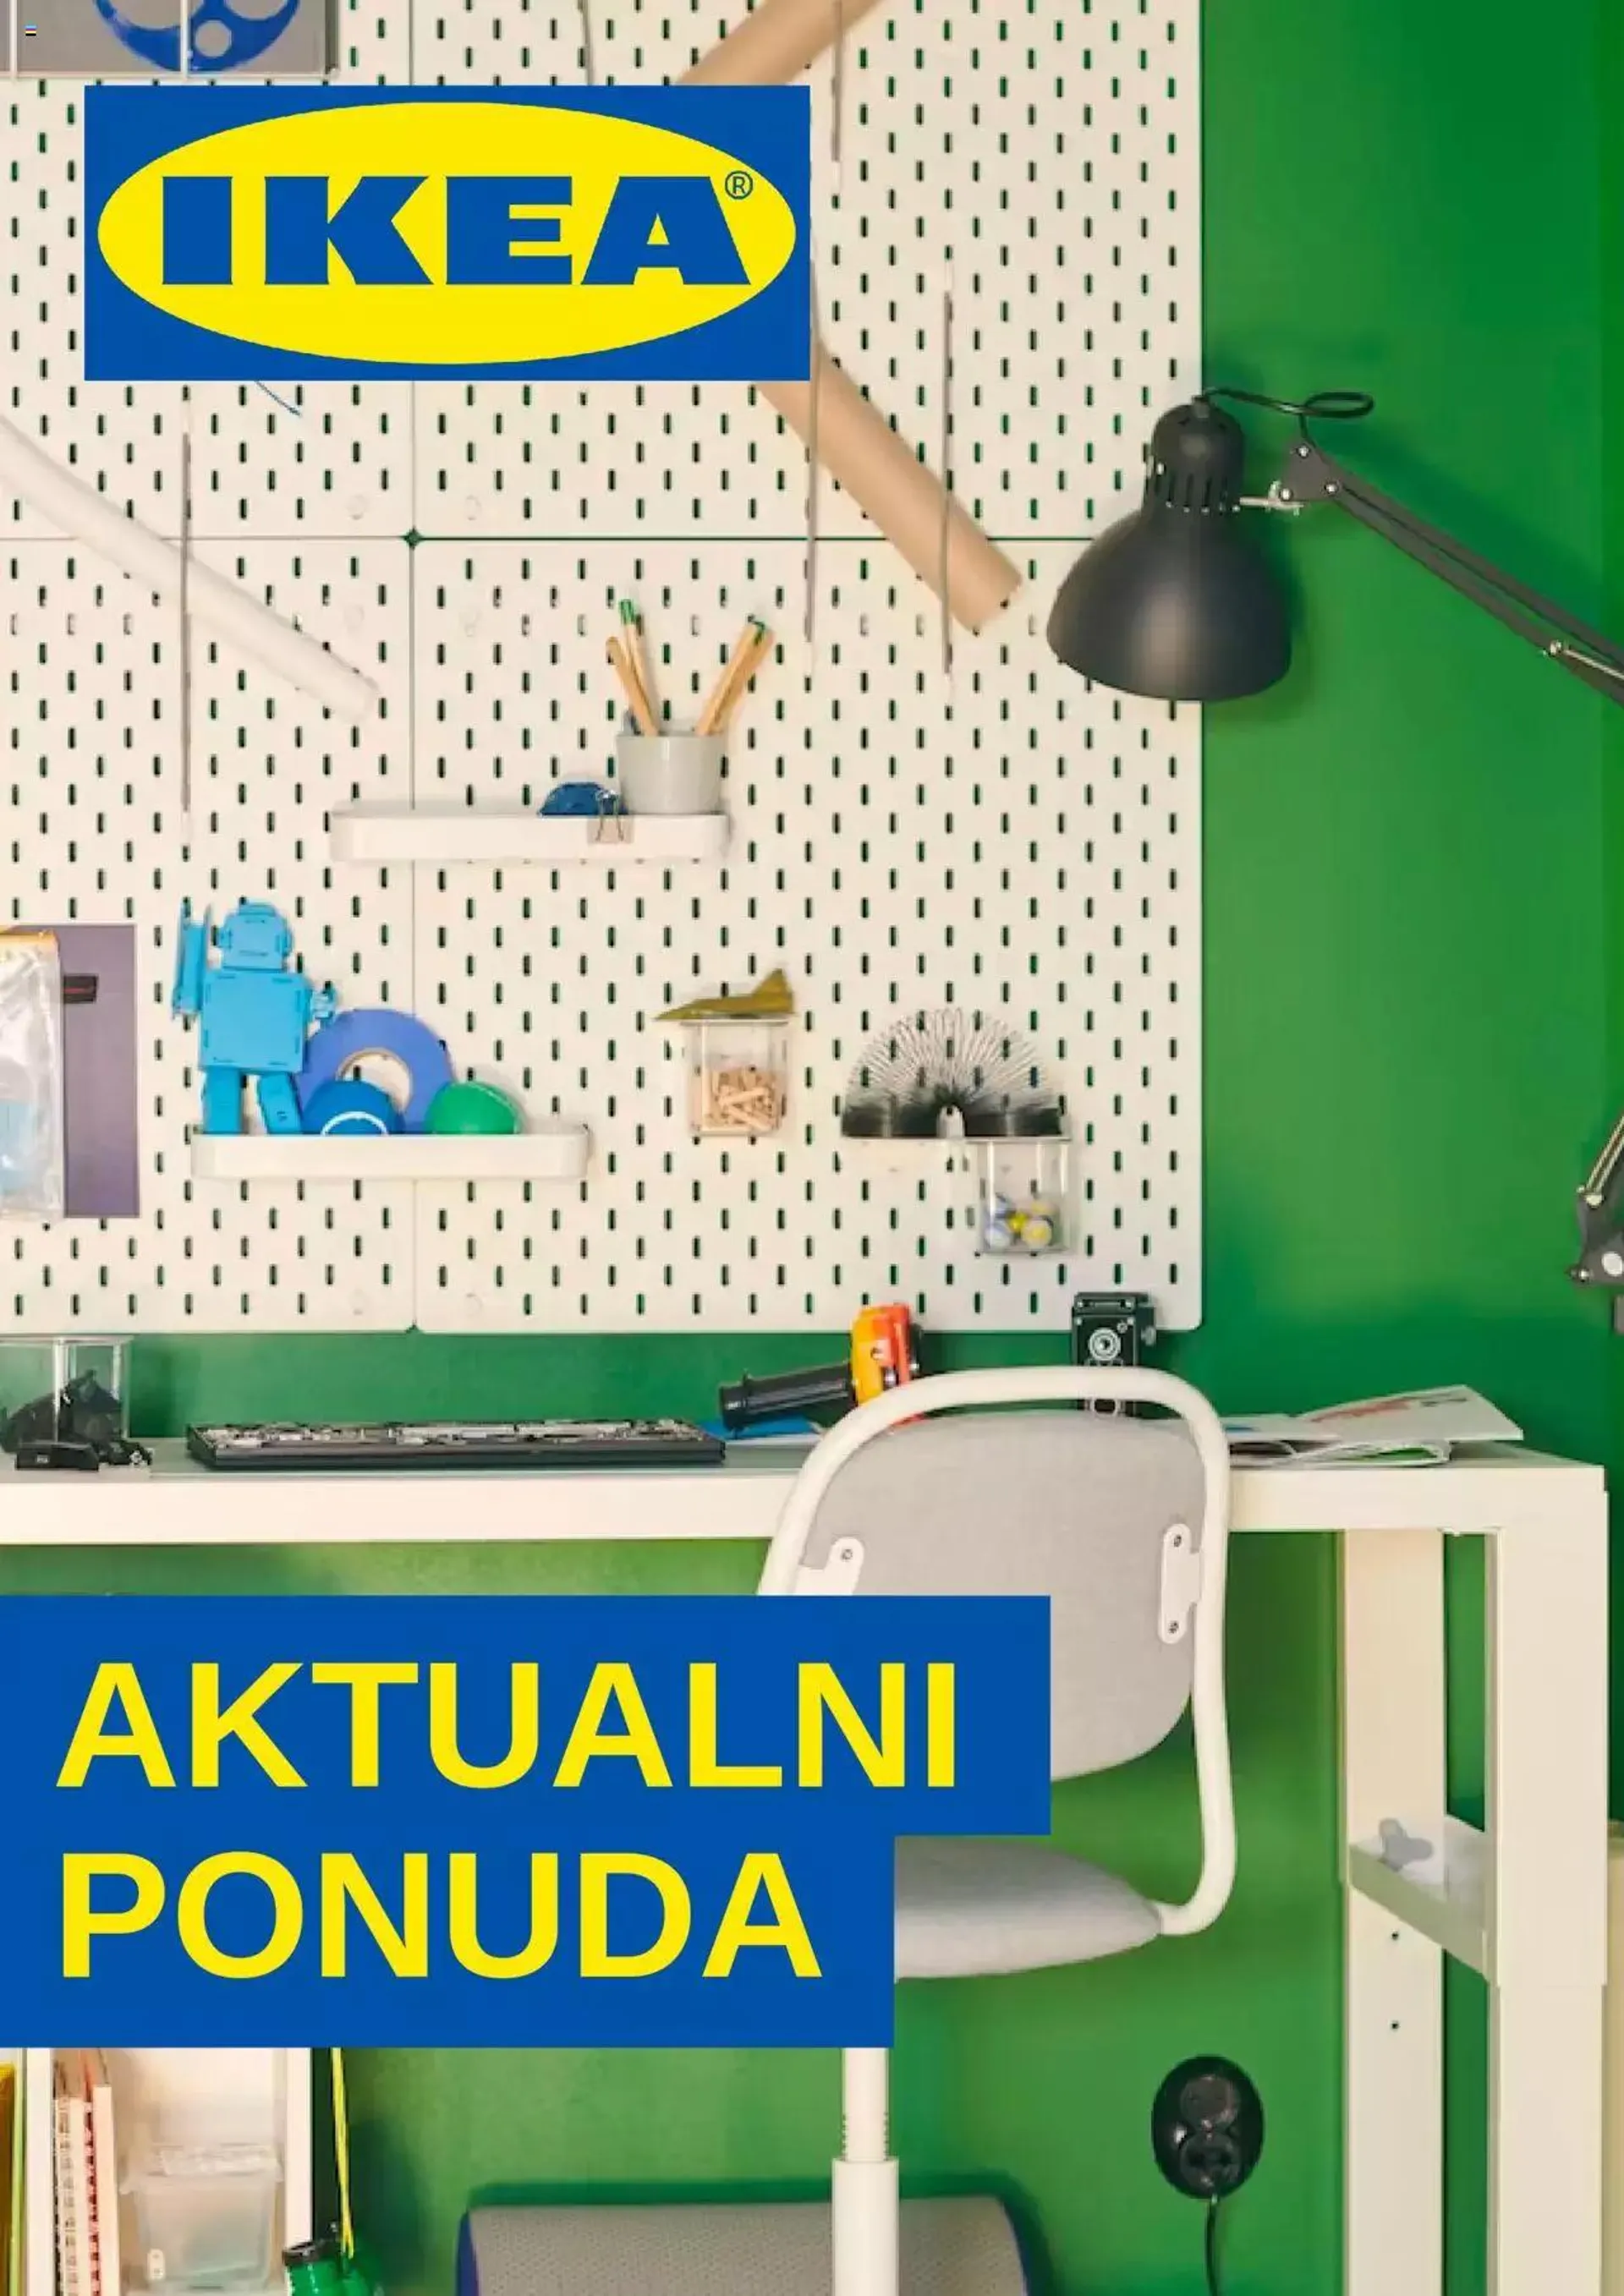 IKEA - Katalog